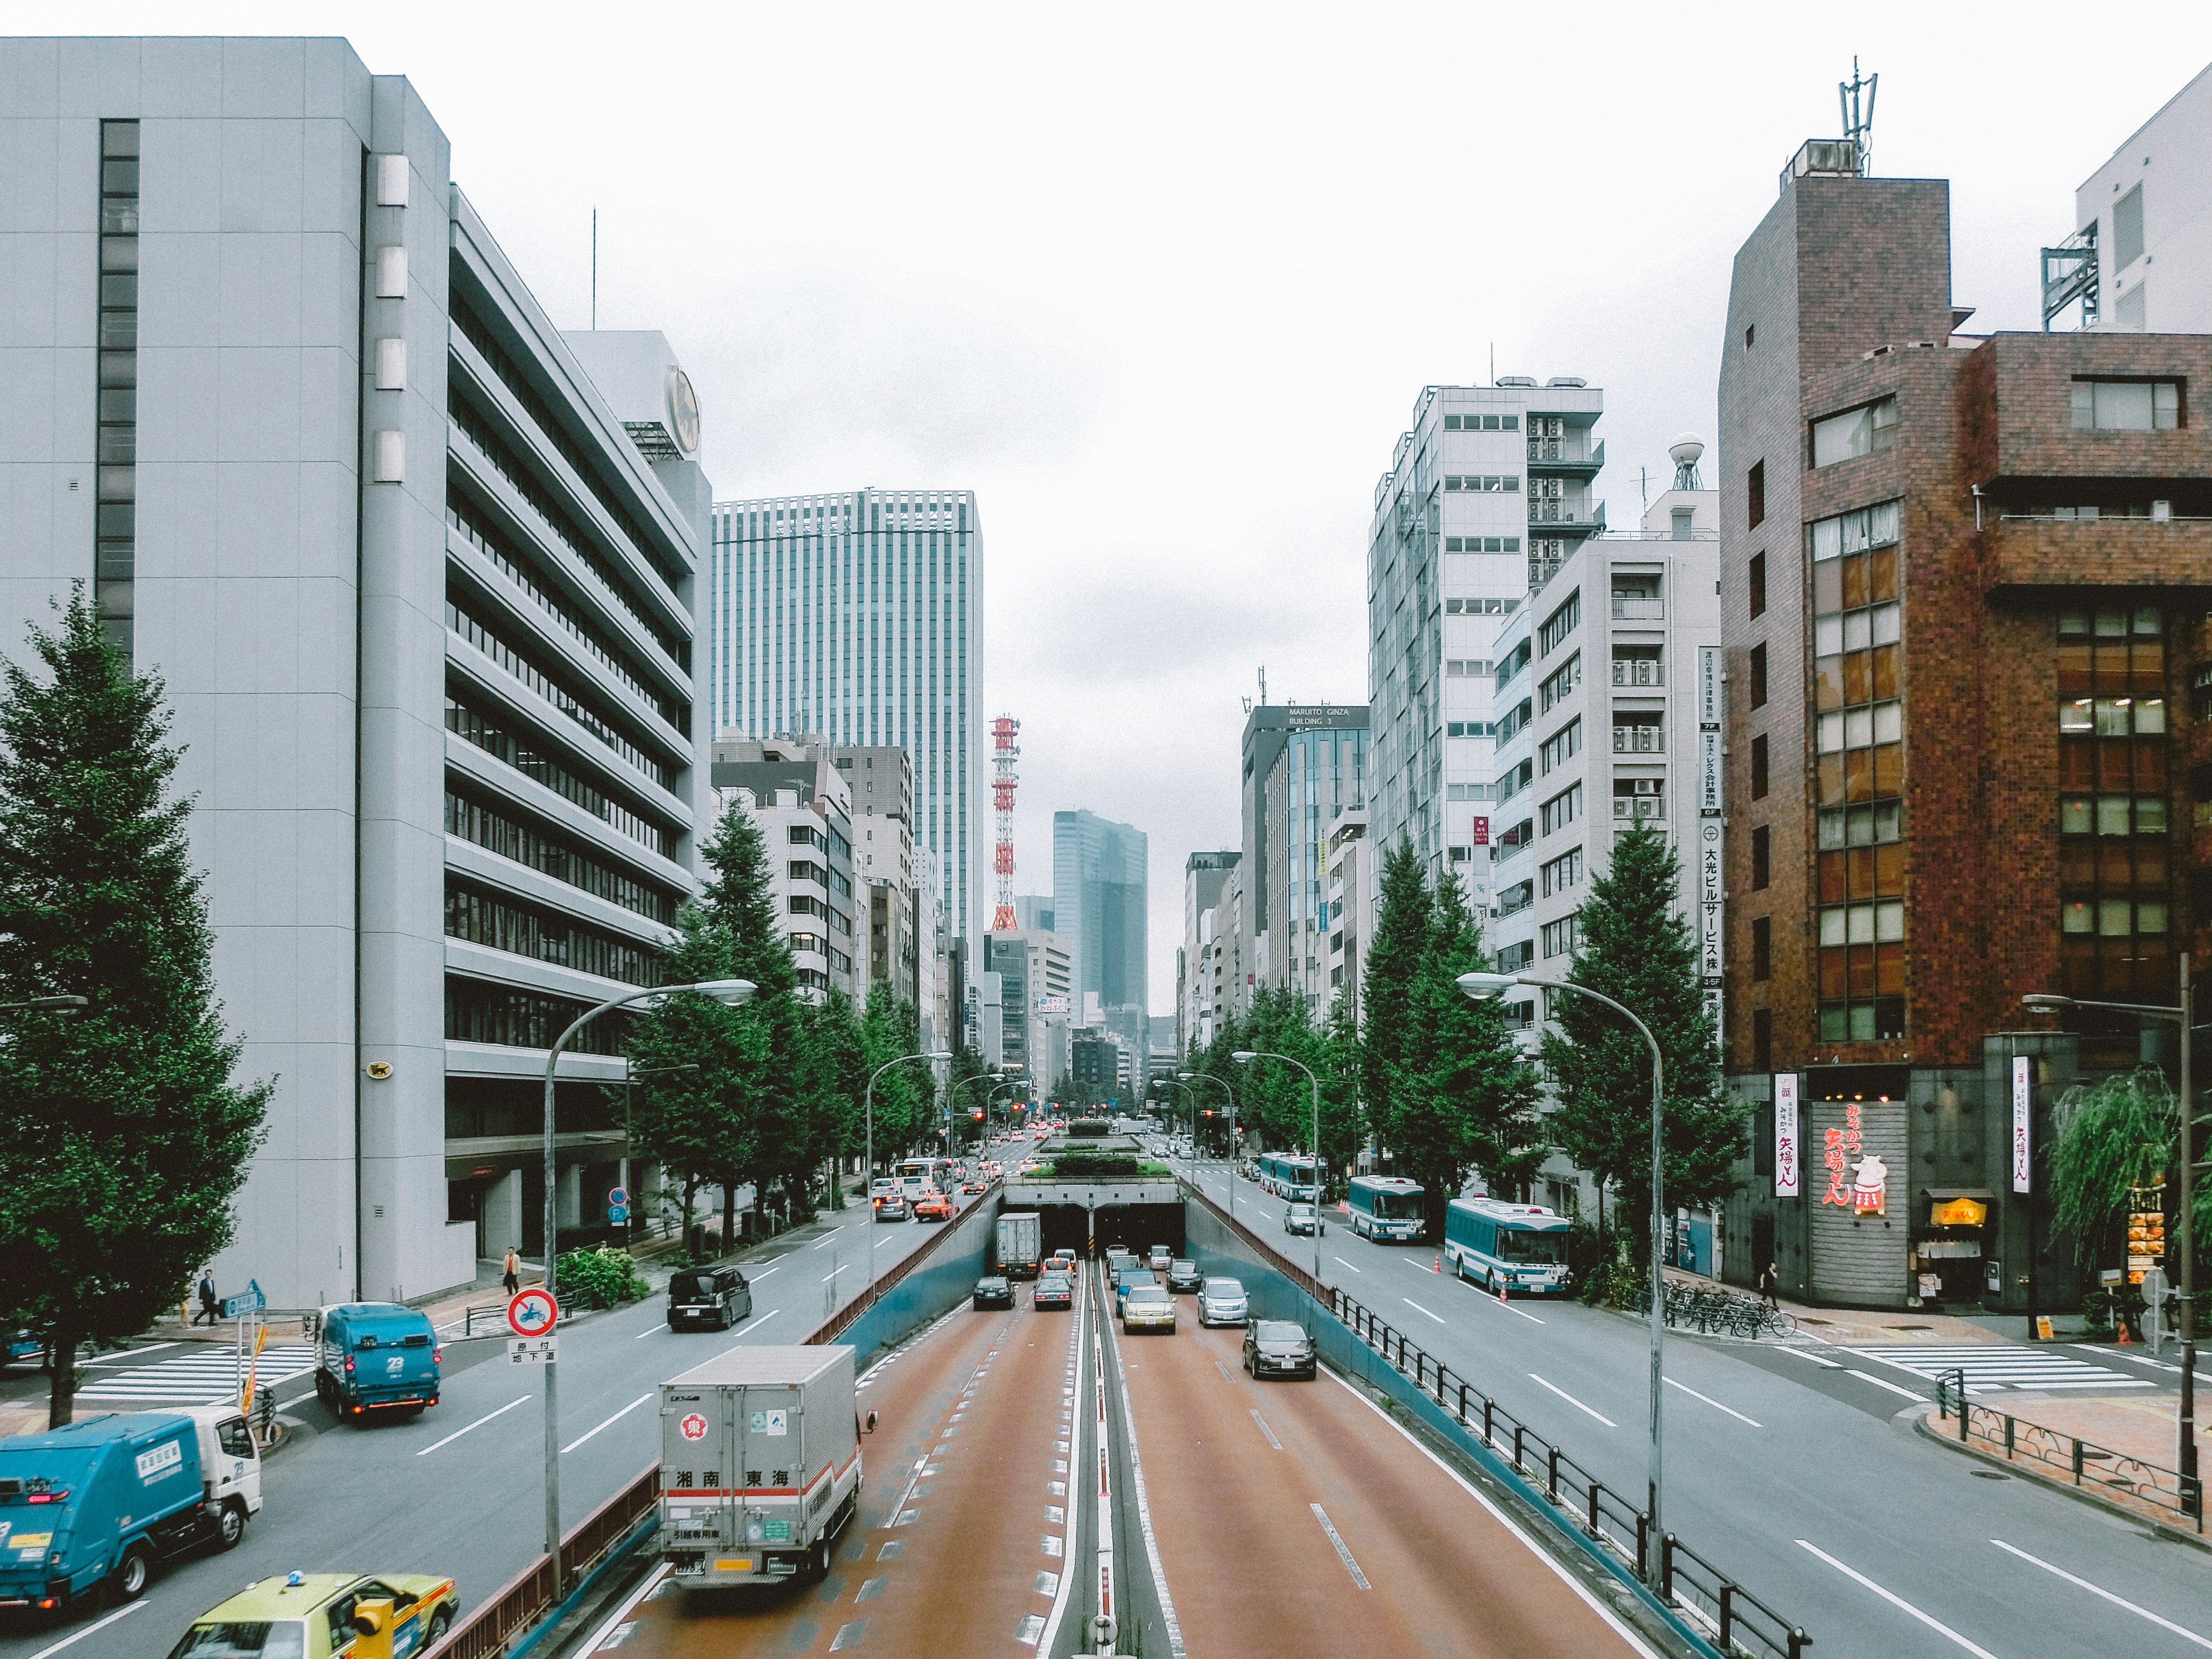 The Showa street, Ginza